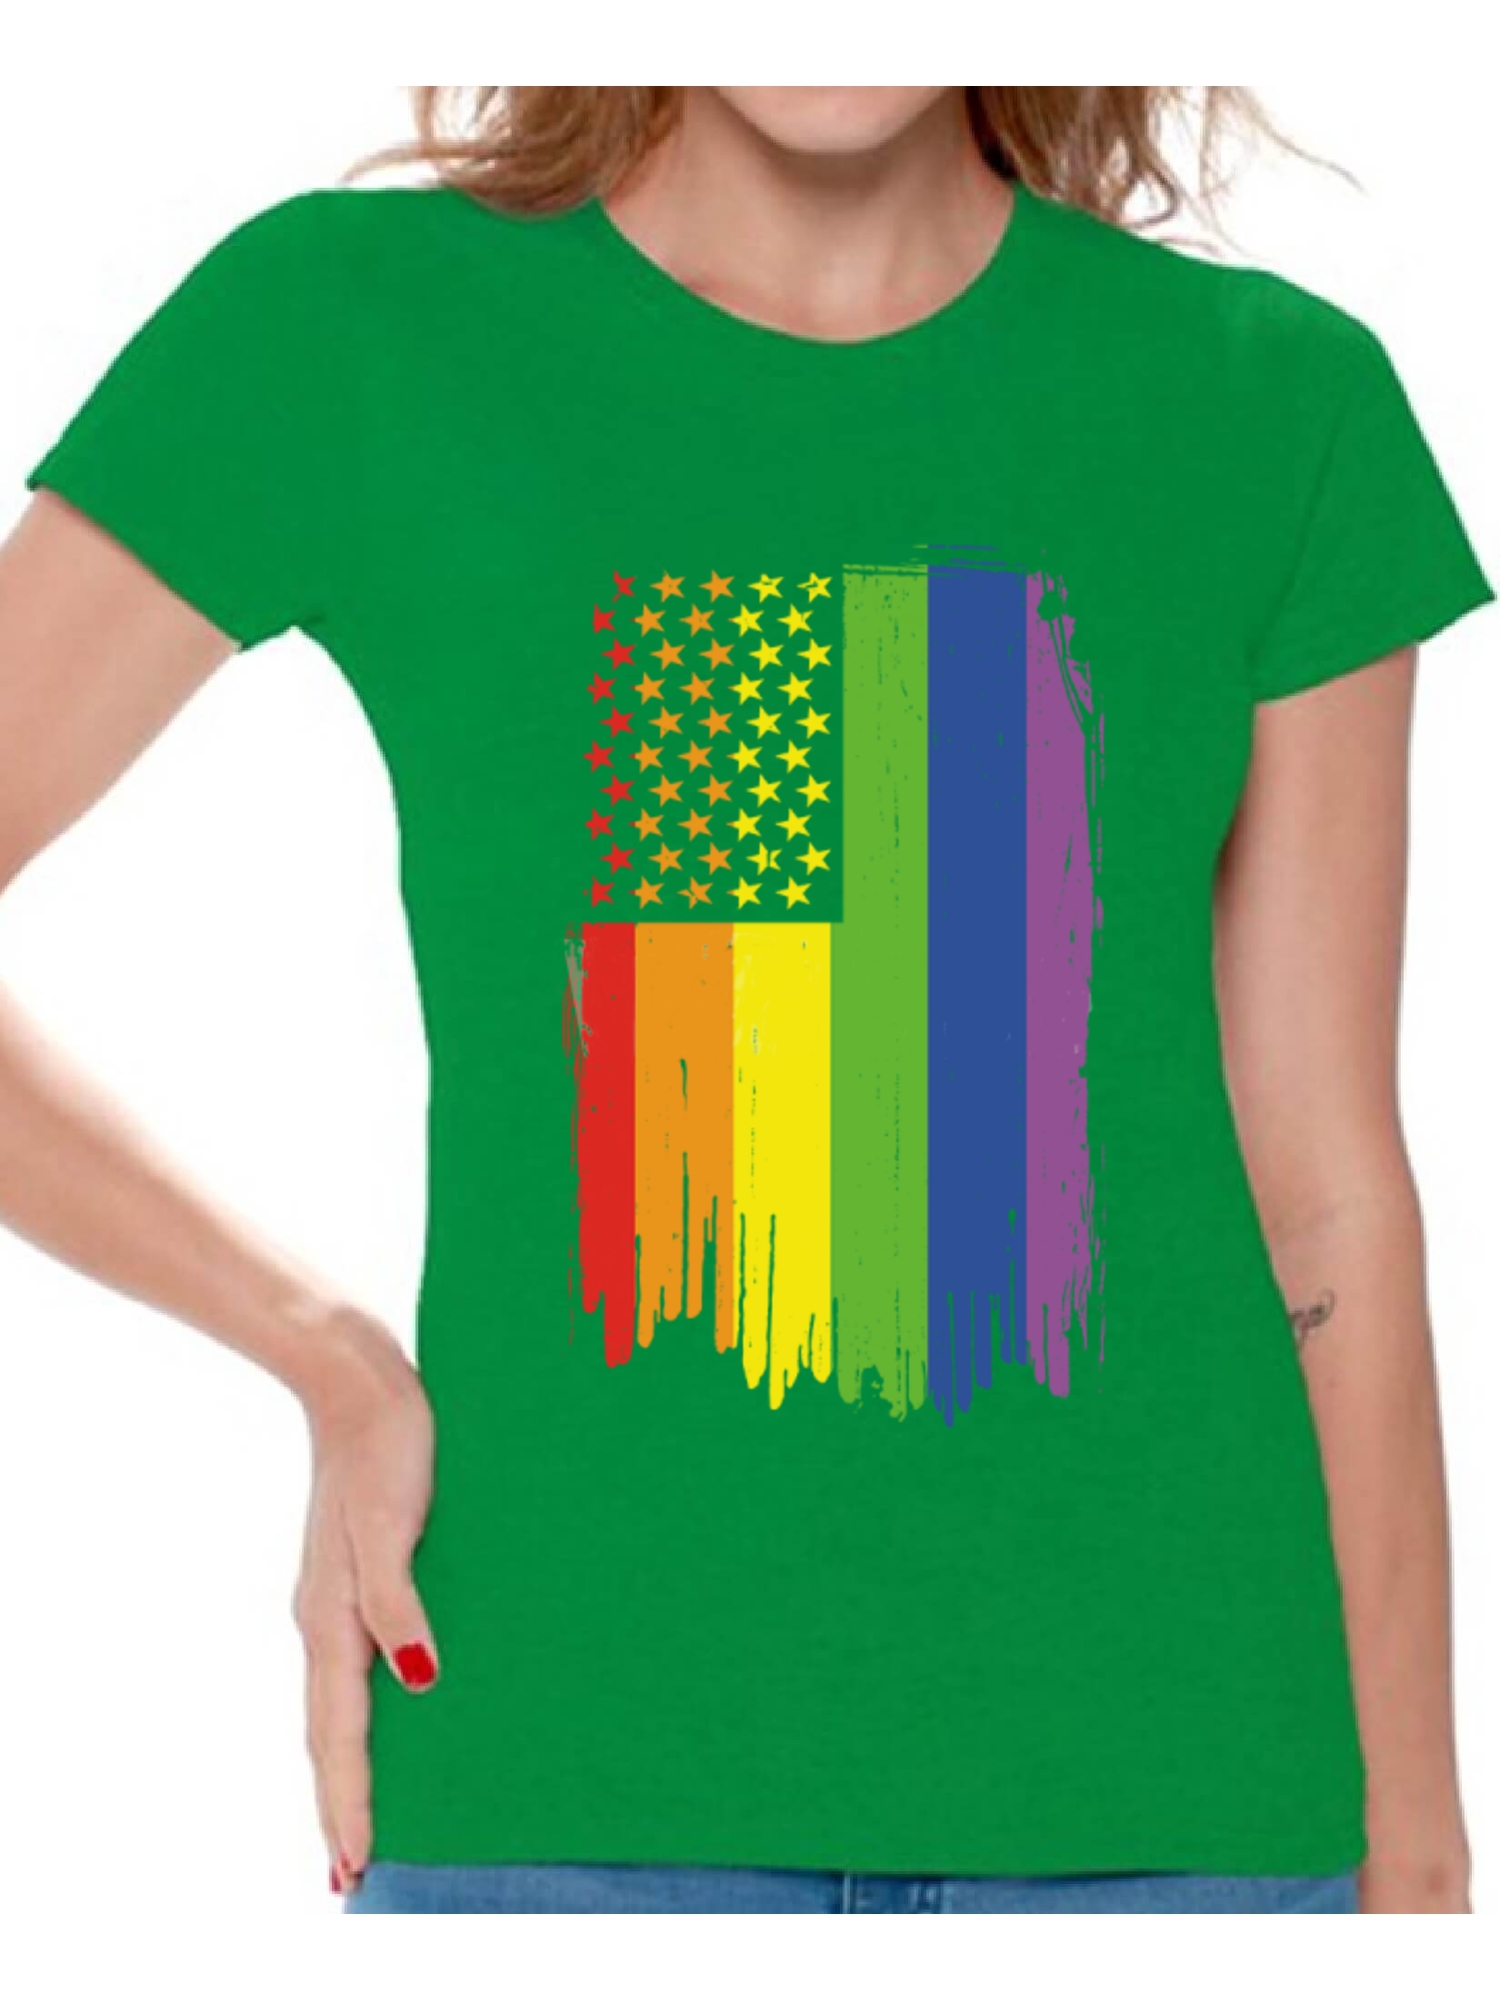 Awkward Styles Rainbow American Flag Womens T Shirt Tops LGBT Flag Shirts for Women Rainbow Flag Neon Tshirt Gay Rights Support Tee Shirt Tops - image 1 of 4